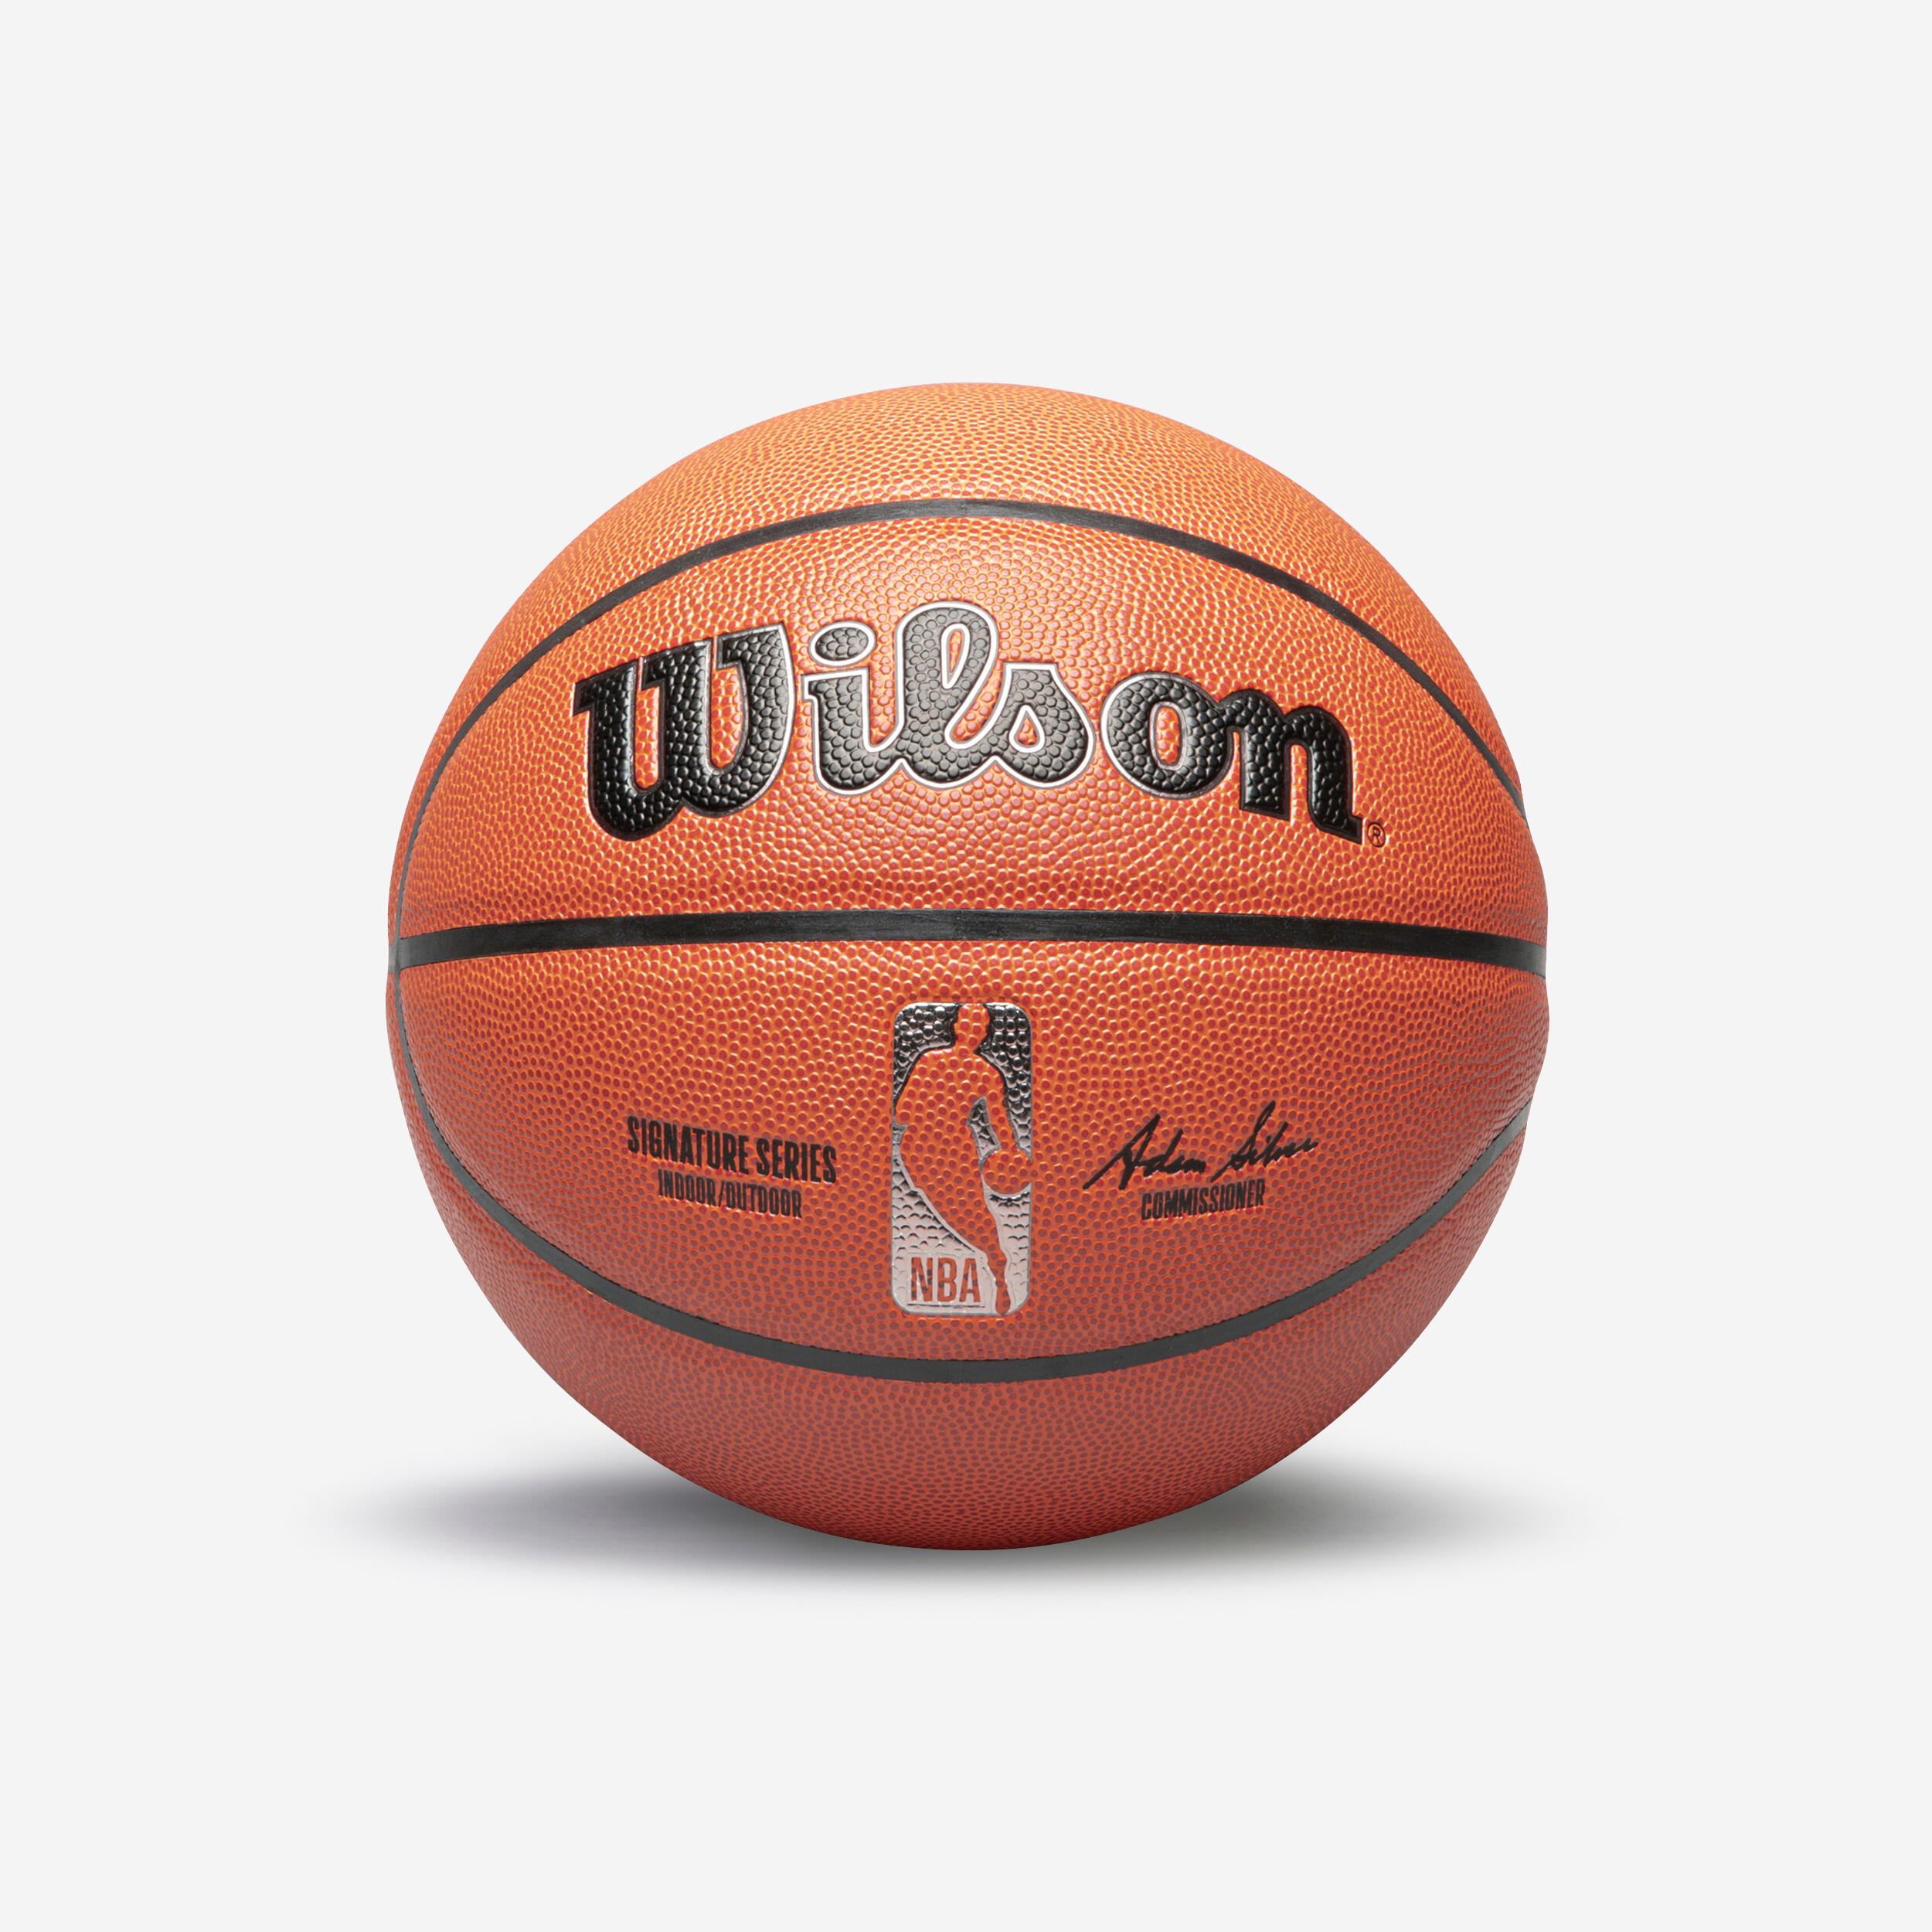 WILSON Size 7 Basketball NBA Signature Series - Orange